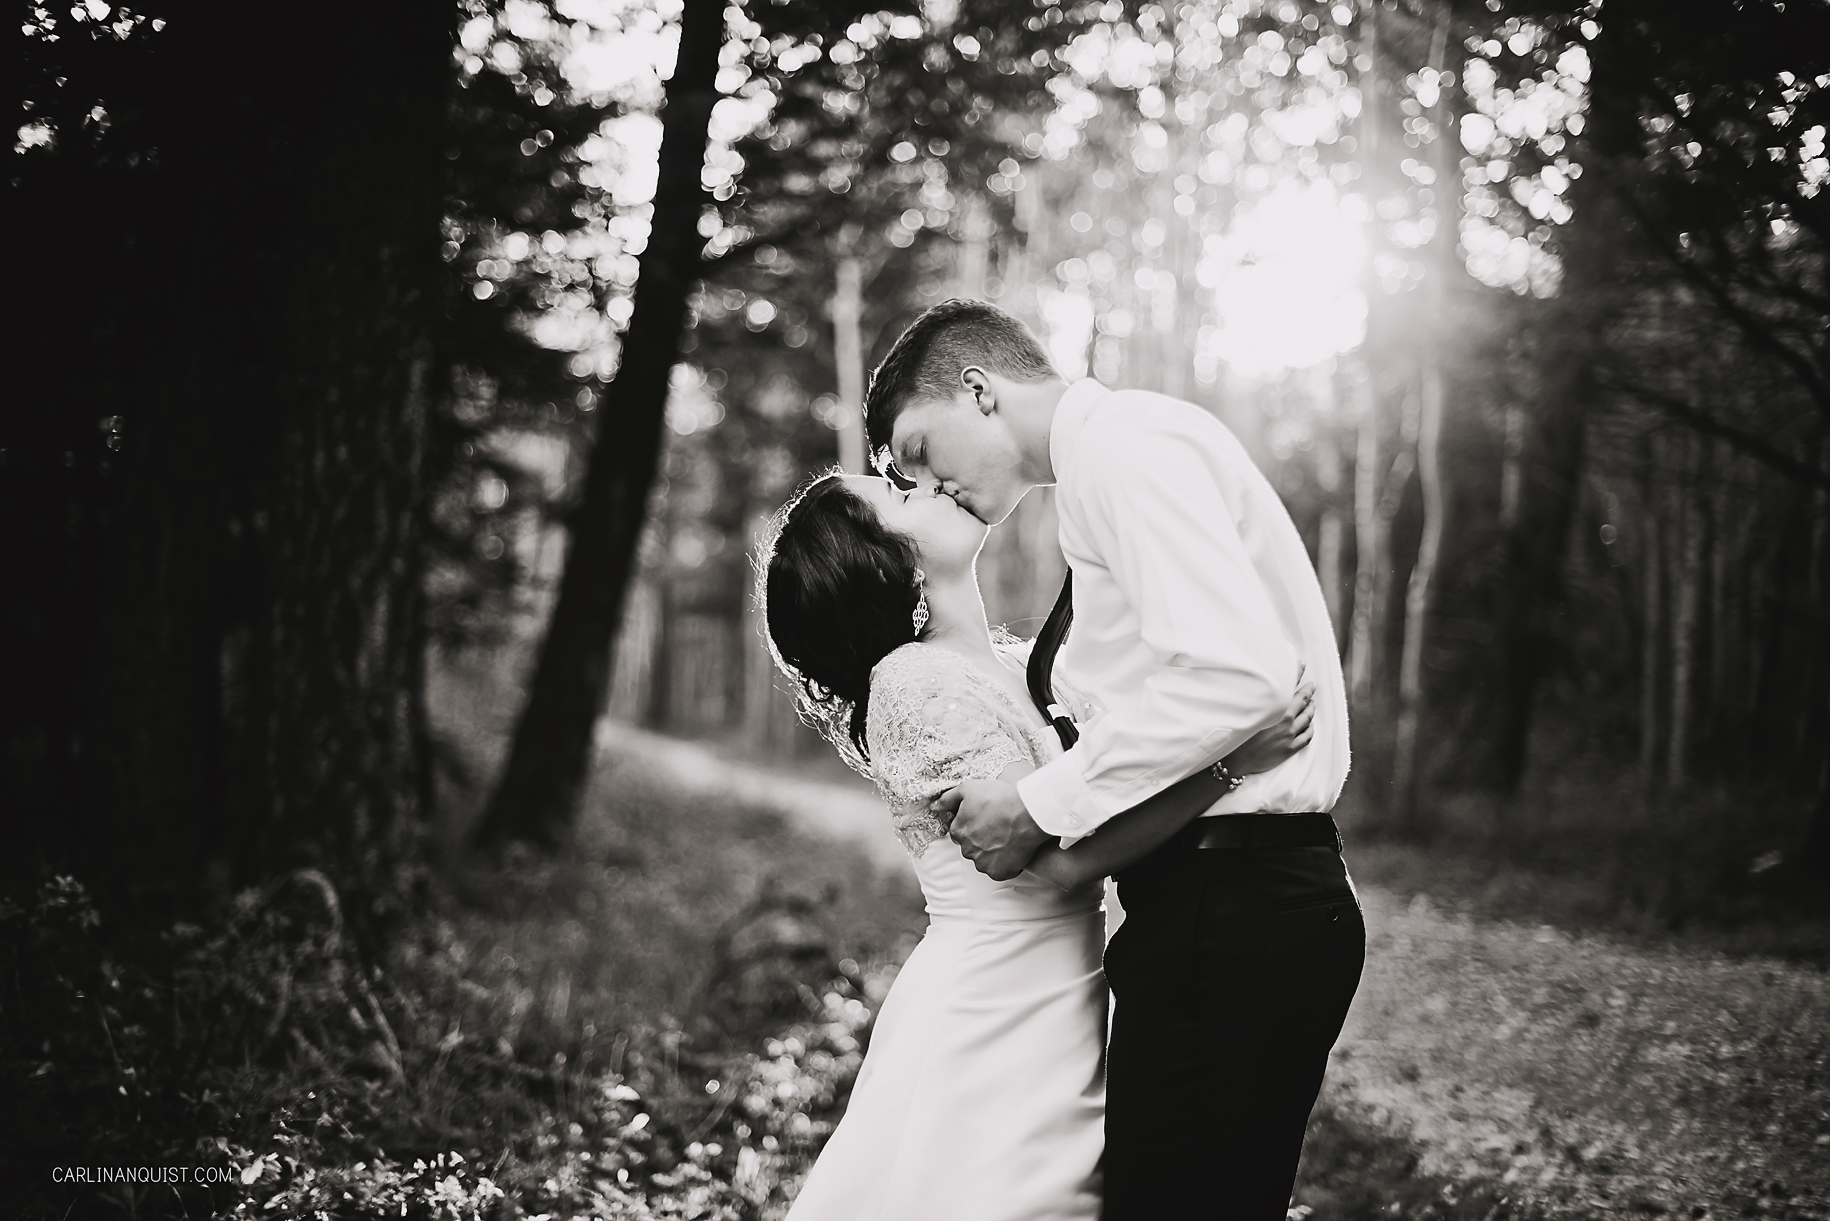 Wedding Photos | Crowsnest Pass Wedding Photographer | Carlin Anquist Photography